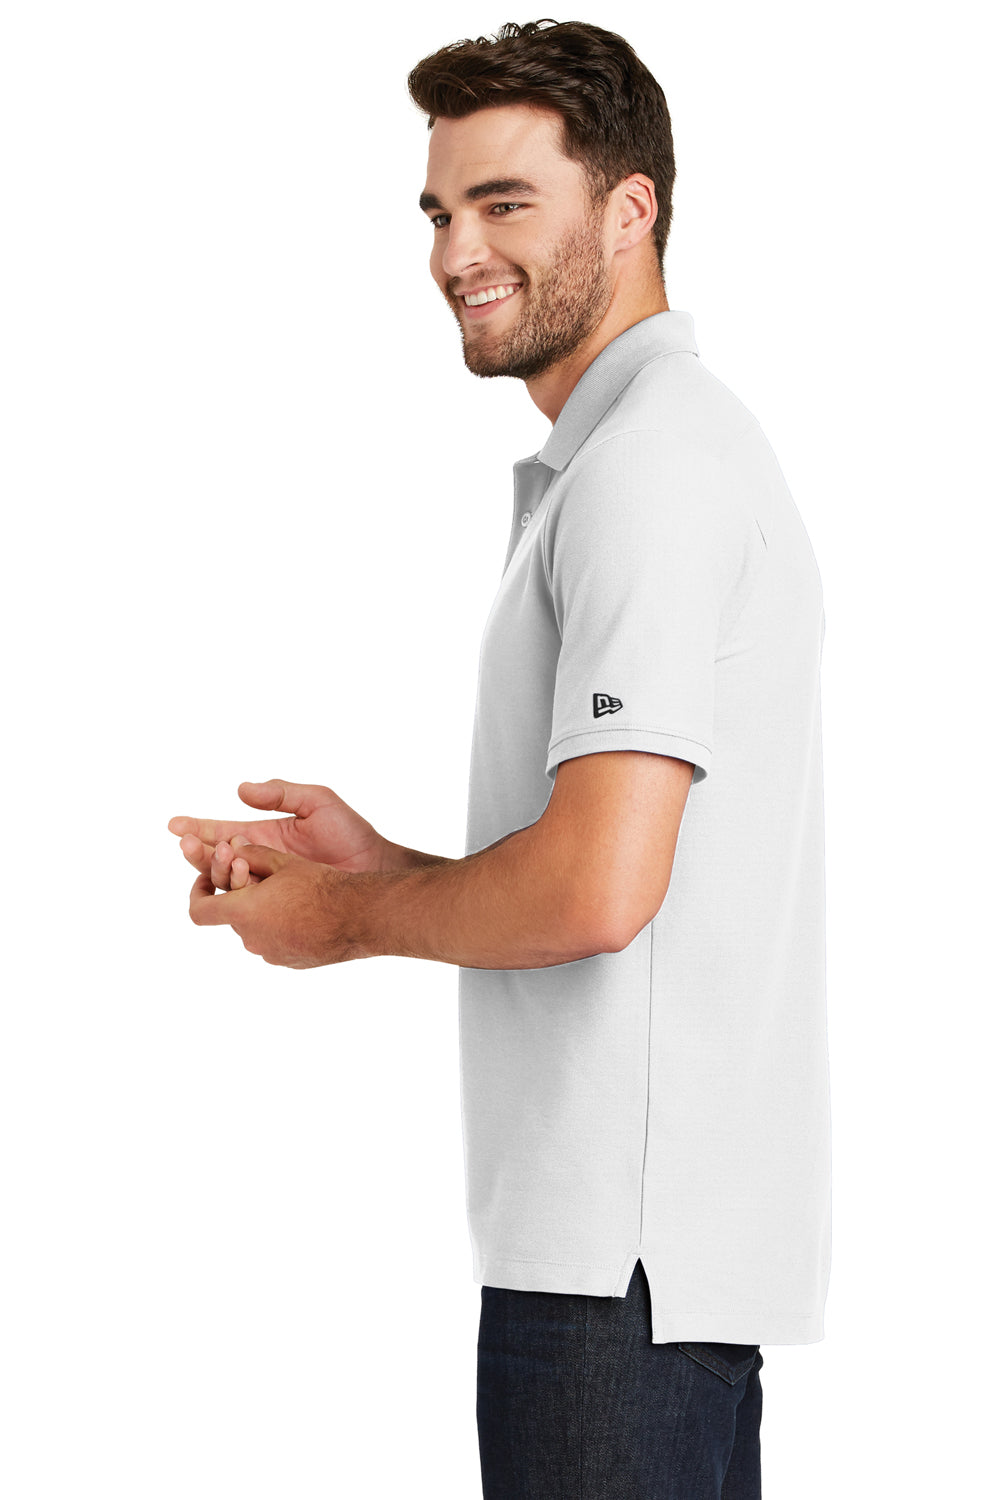 New Era NEA300 Mens Venue Home Plate Moisture Wicking Short Sleeve Polo Shirt White Side